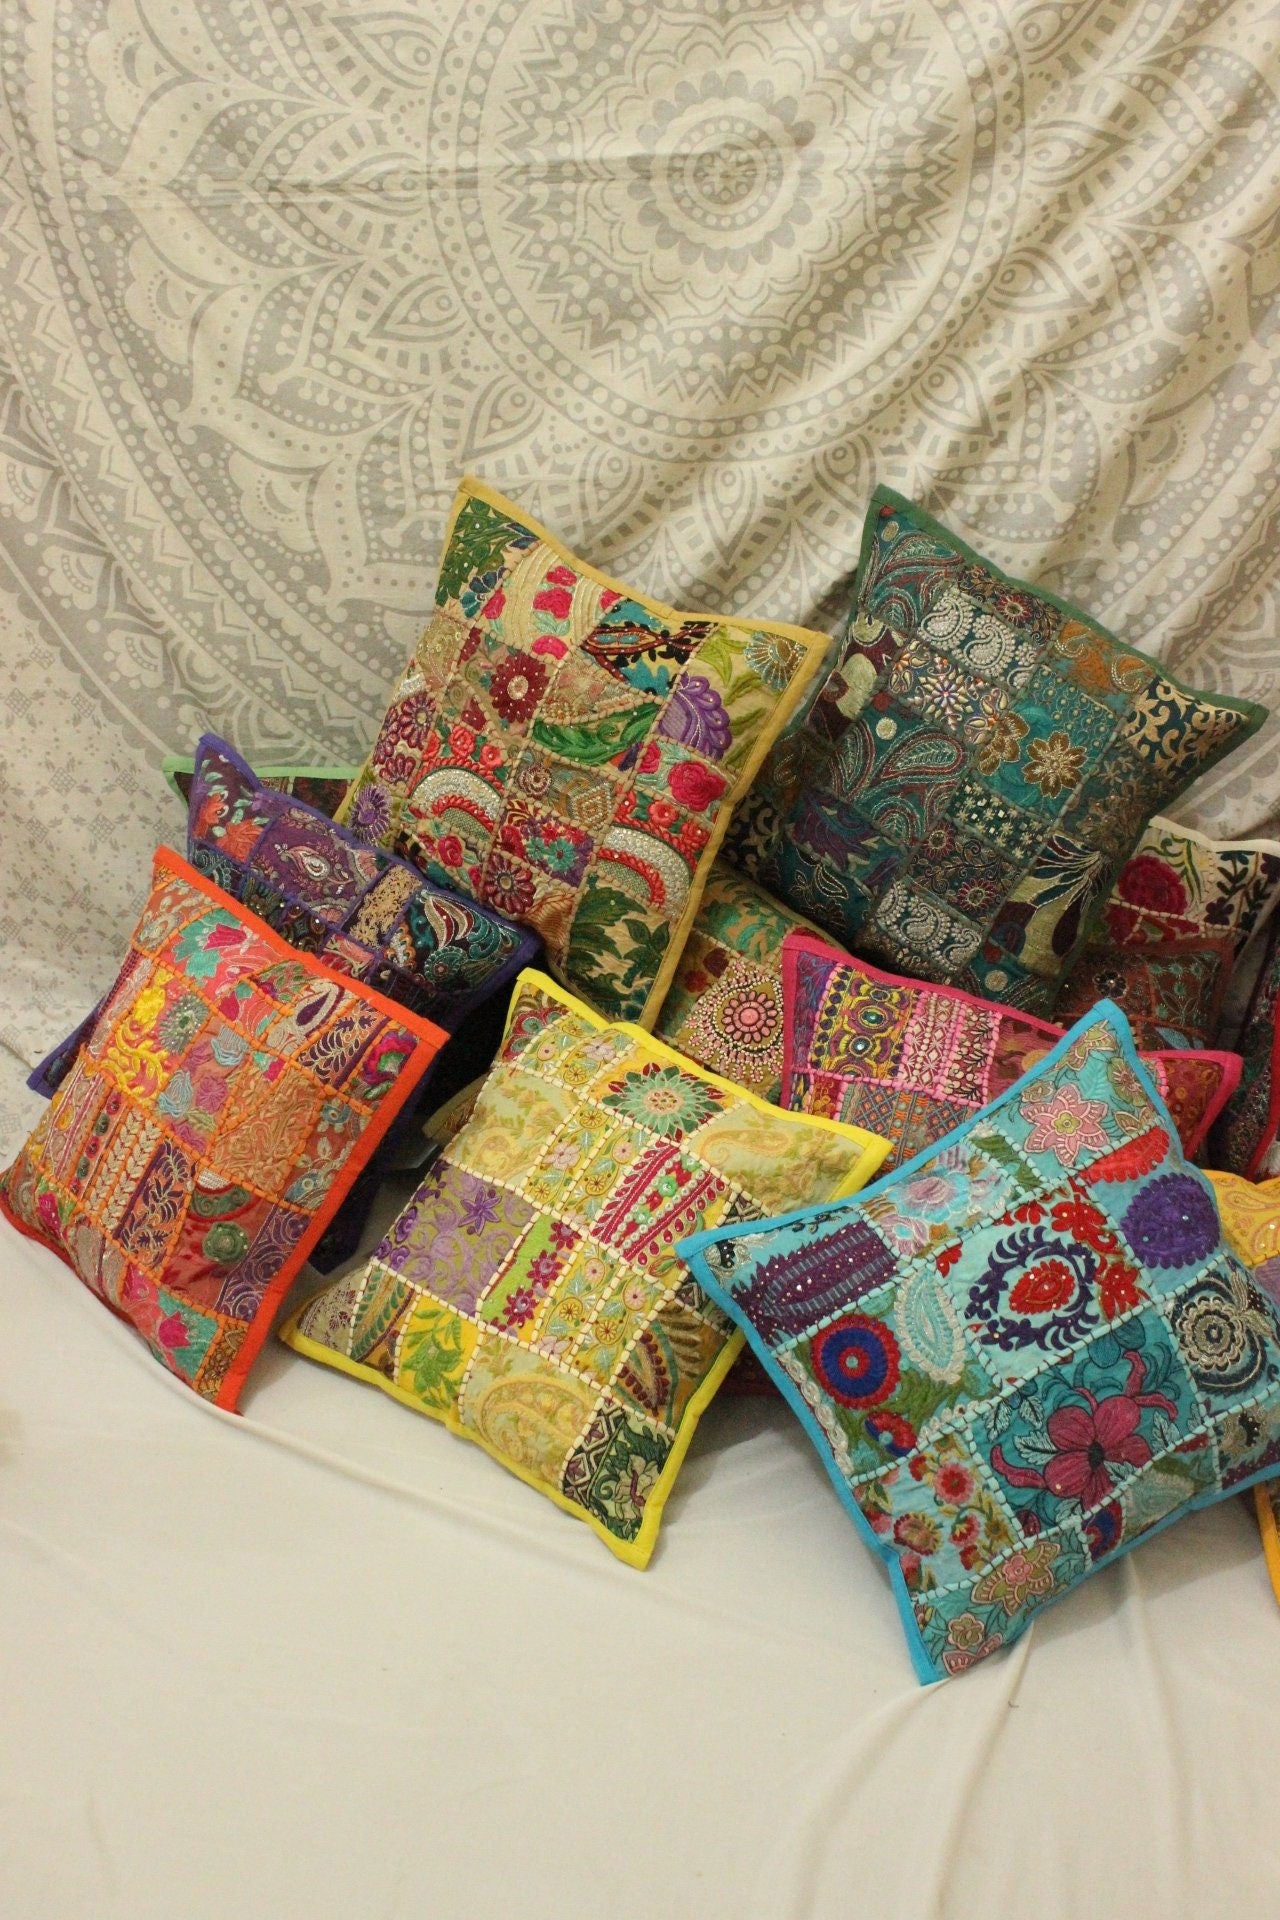 Indian Bohemian Boho Pillow Cover Sofa Pillow Decorative Throw Pillow Embroidered Boho Pillow Vintage Home Patchwork Pillow Accent Pillow